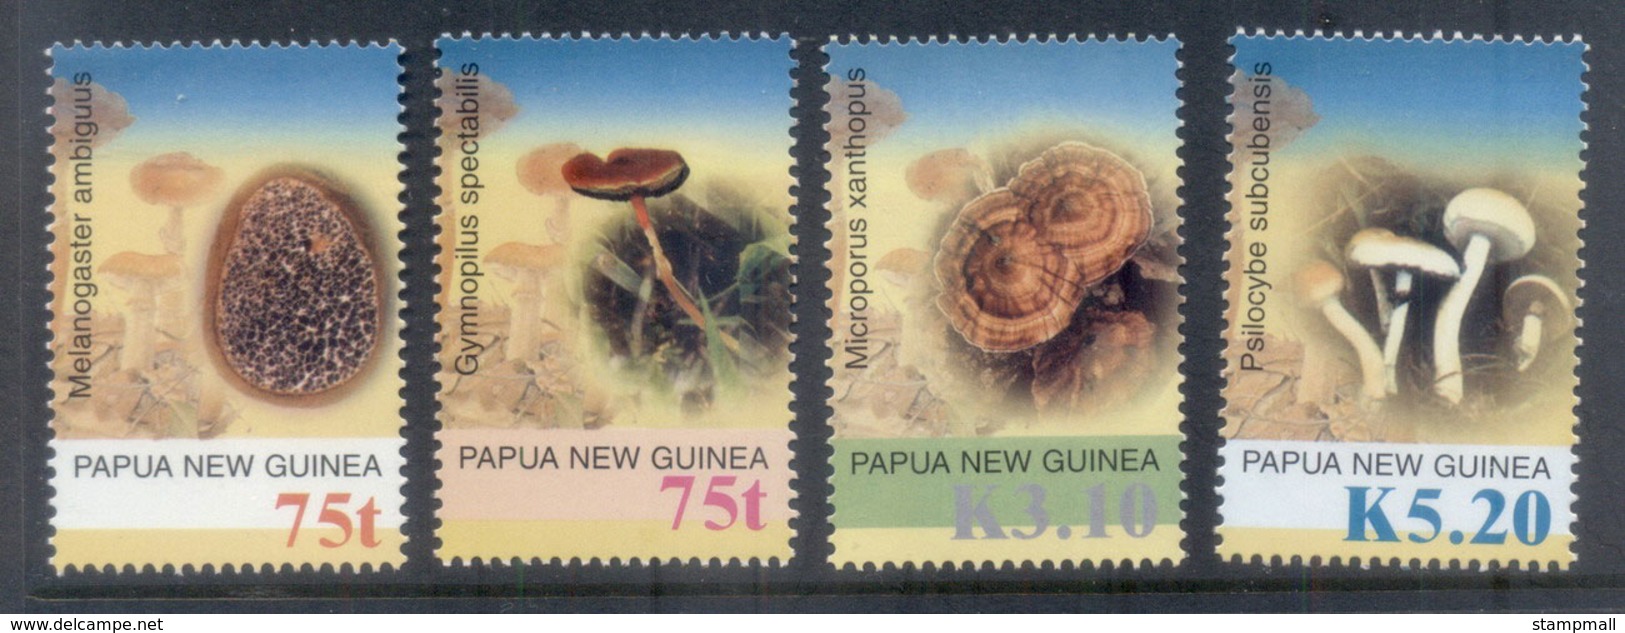 PNG 2005 Funghi, Mushrooms MUH - Papua New Guinea